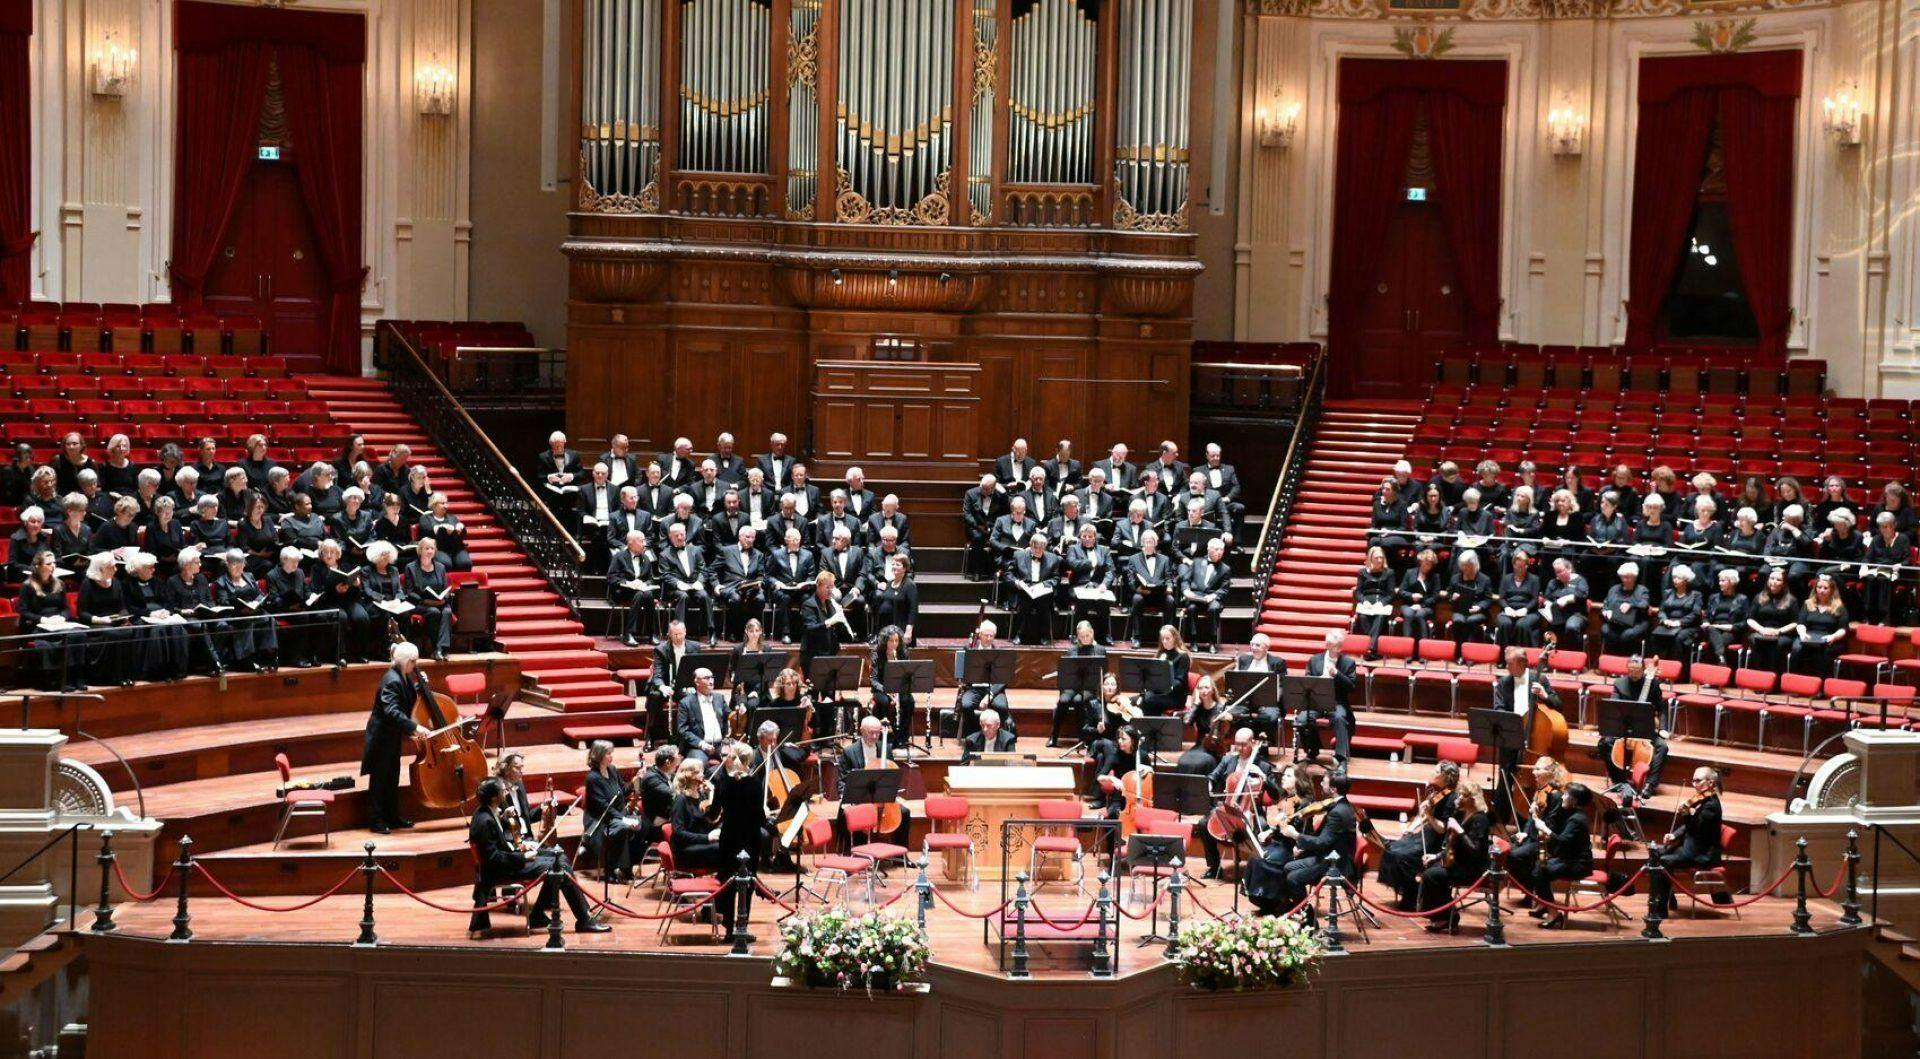 The Amsterdam Mixed Choir sings Bach's St John Passion